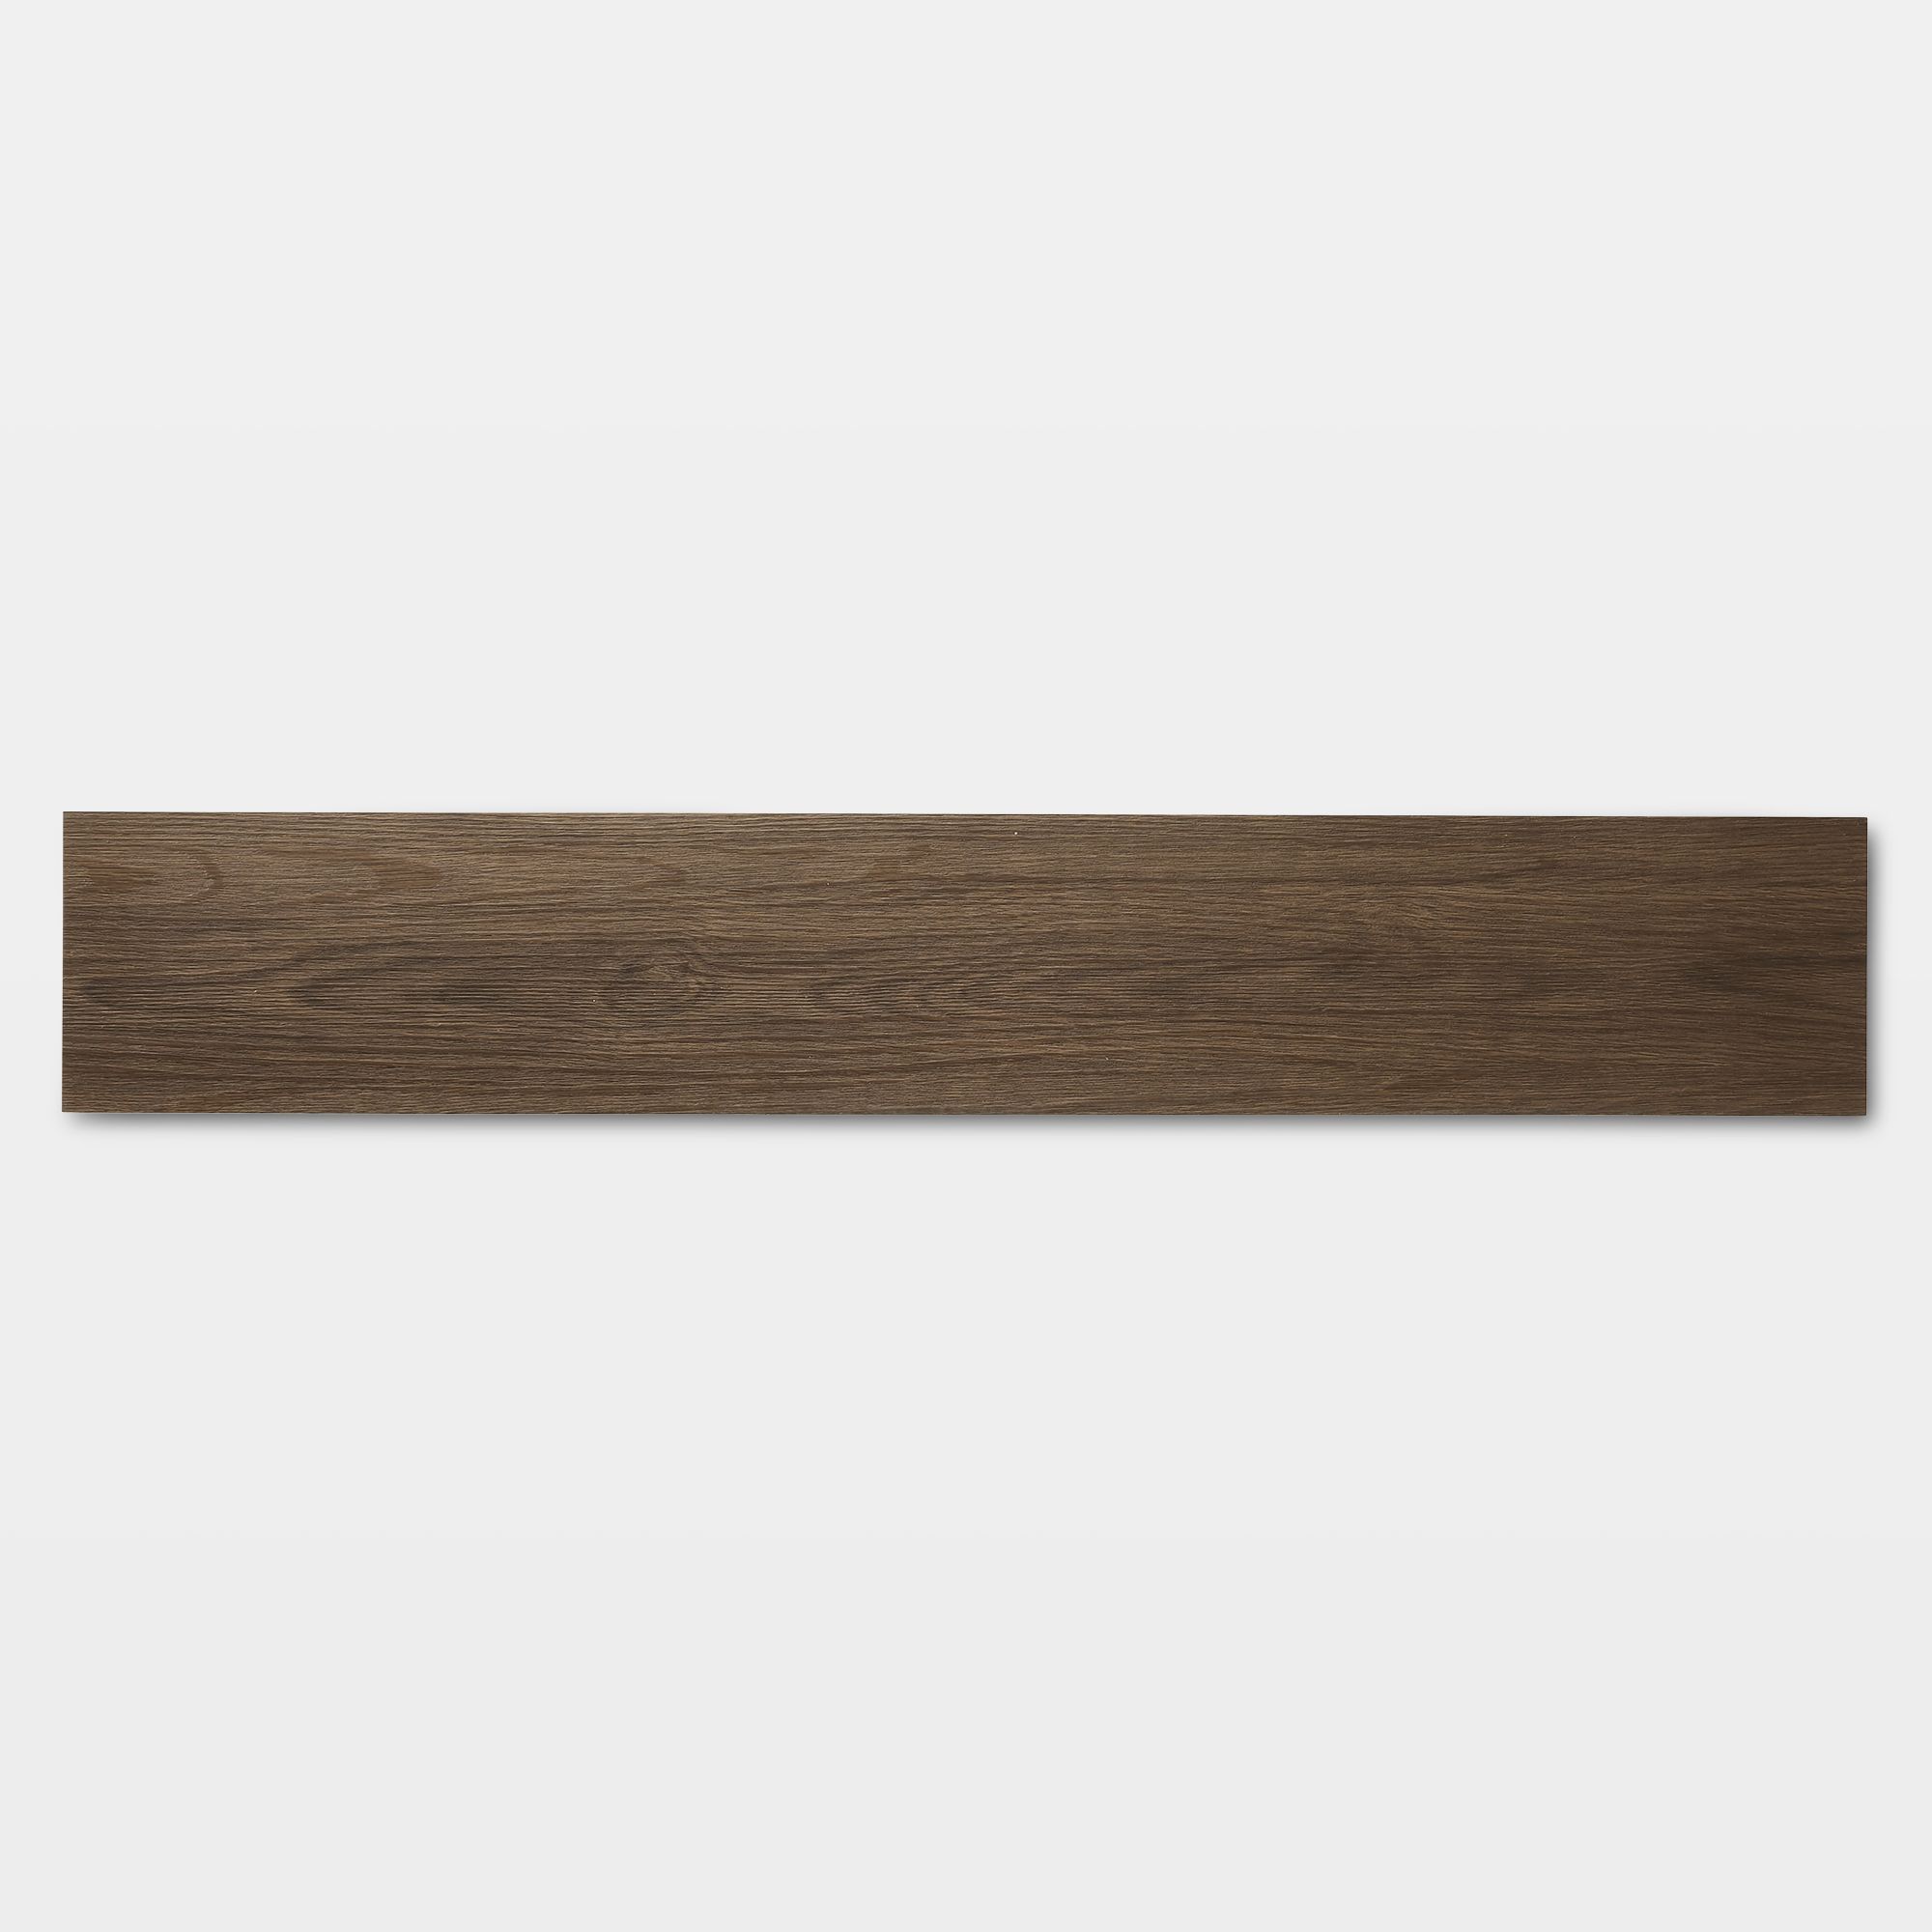 GoodHome Poprock Wood planks Wood effect Self-adhesive Vinyl plank, Pack of 7